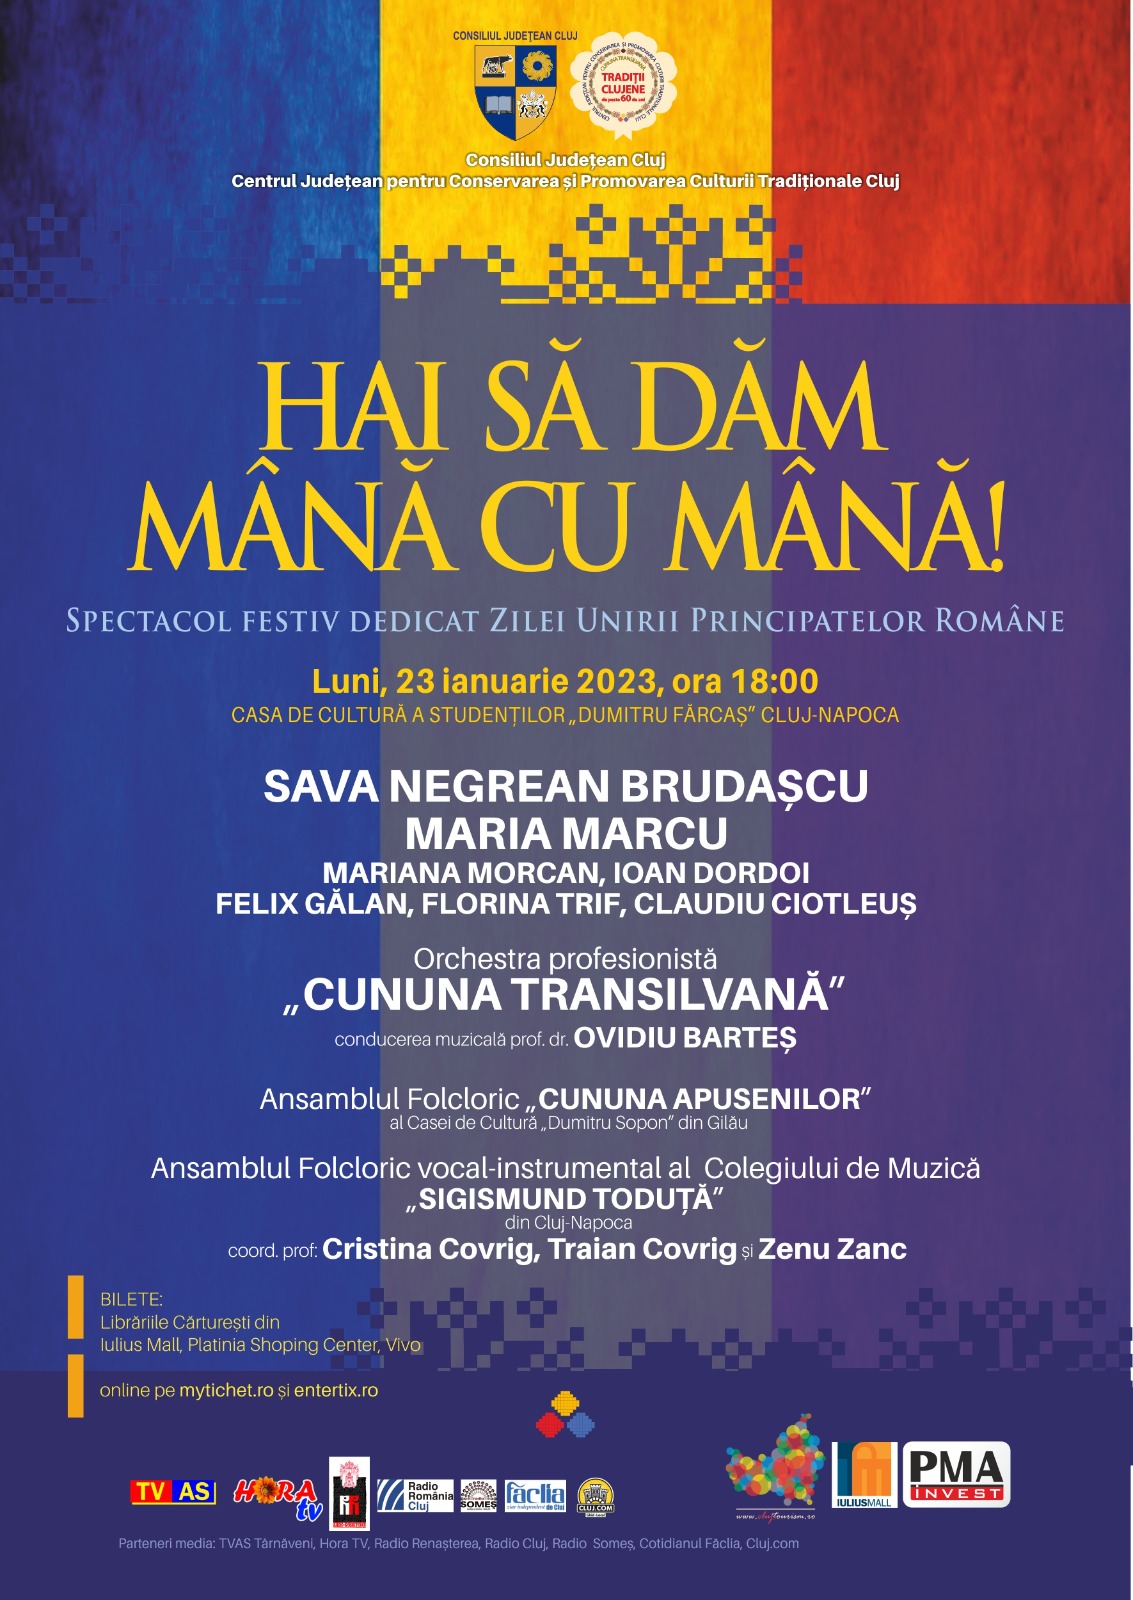 Spectacol festiv dedicat Zilei Unirii Principatelor Române